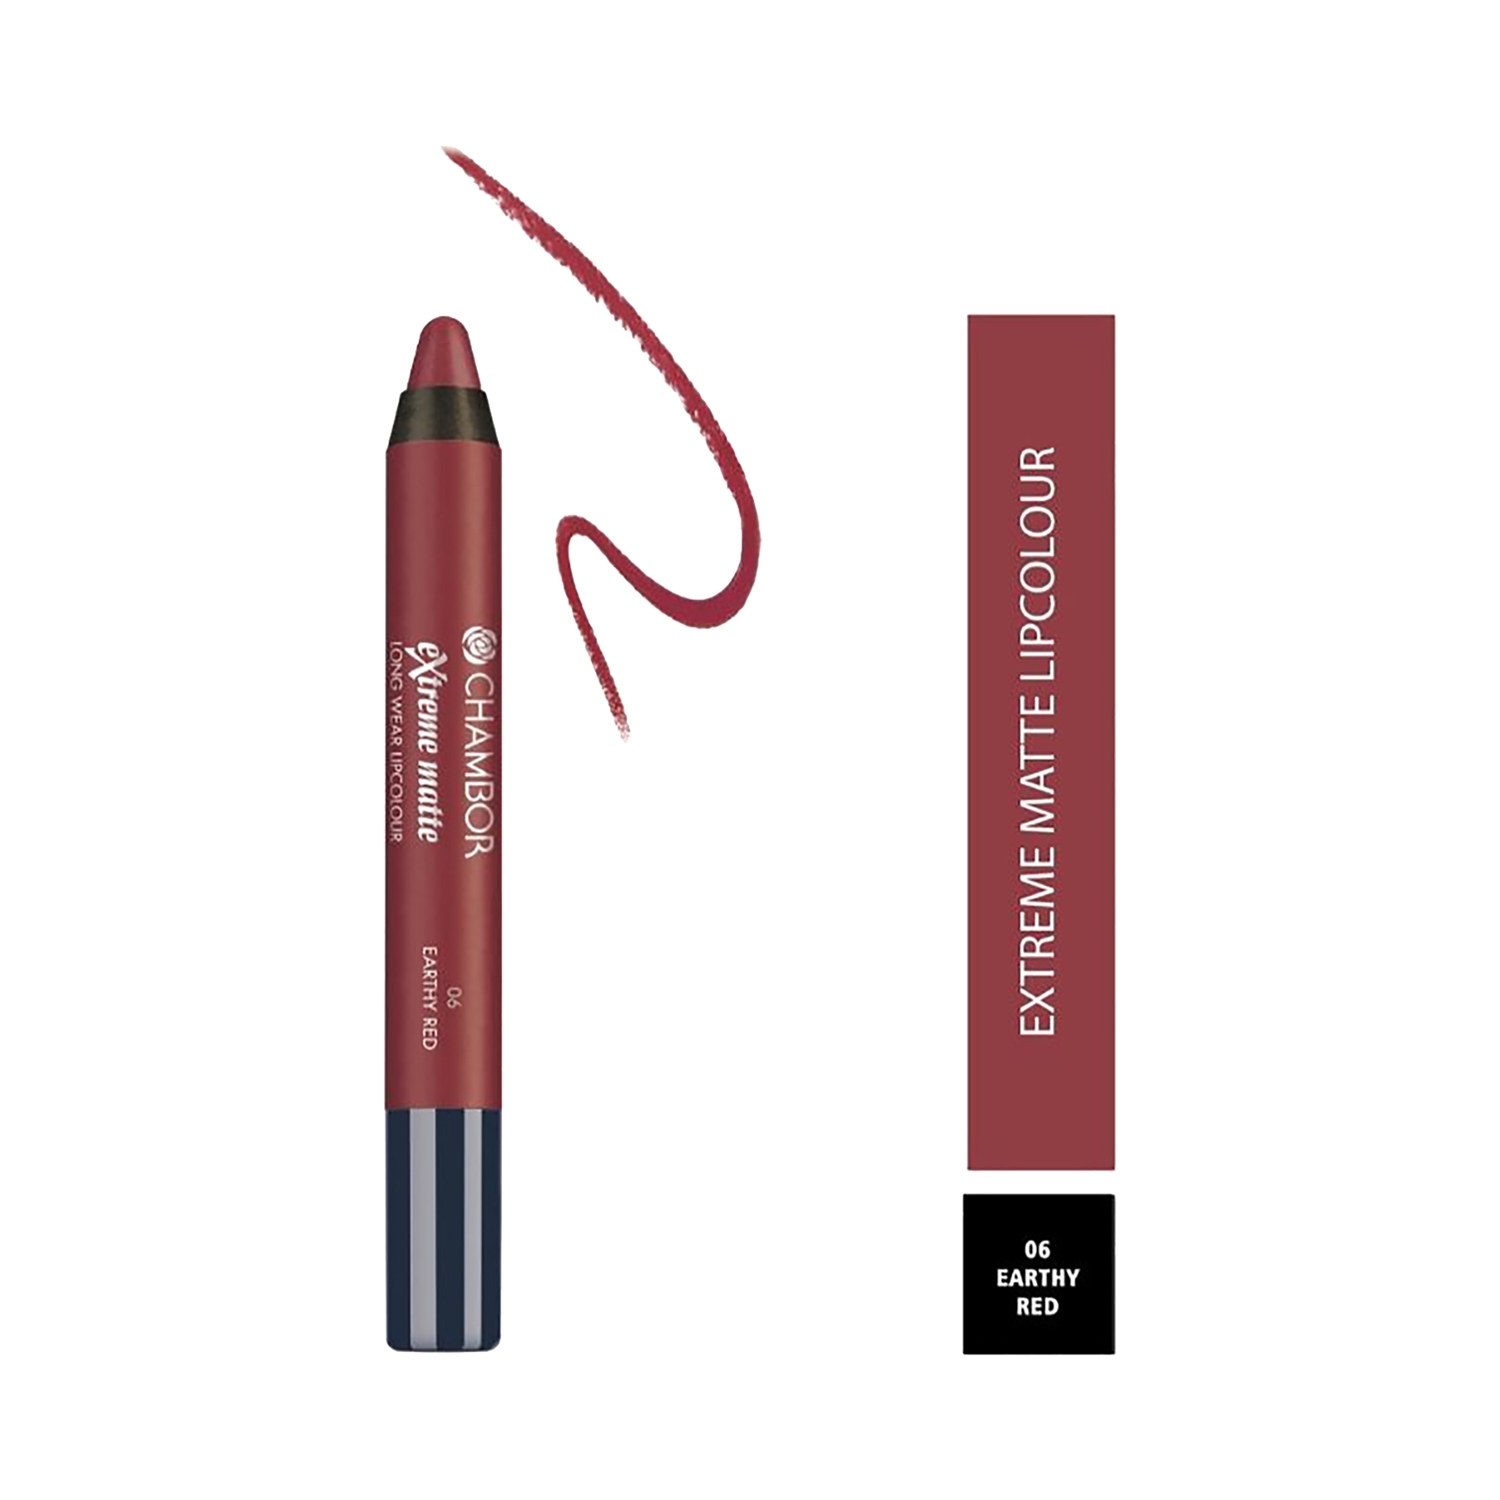 Chambor | Chambor Extreme Matte Long Wear Lip Color + Hyaluronic Acid - N 06 Earthy Red (2.8g)